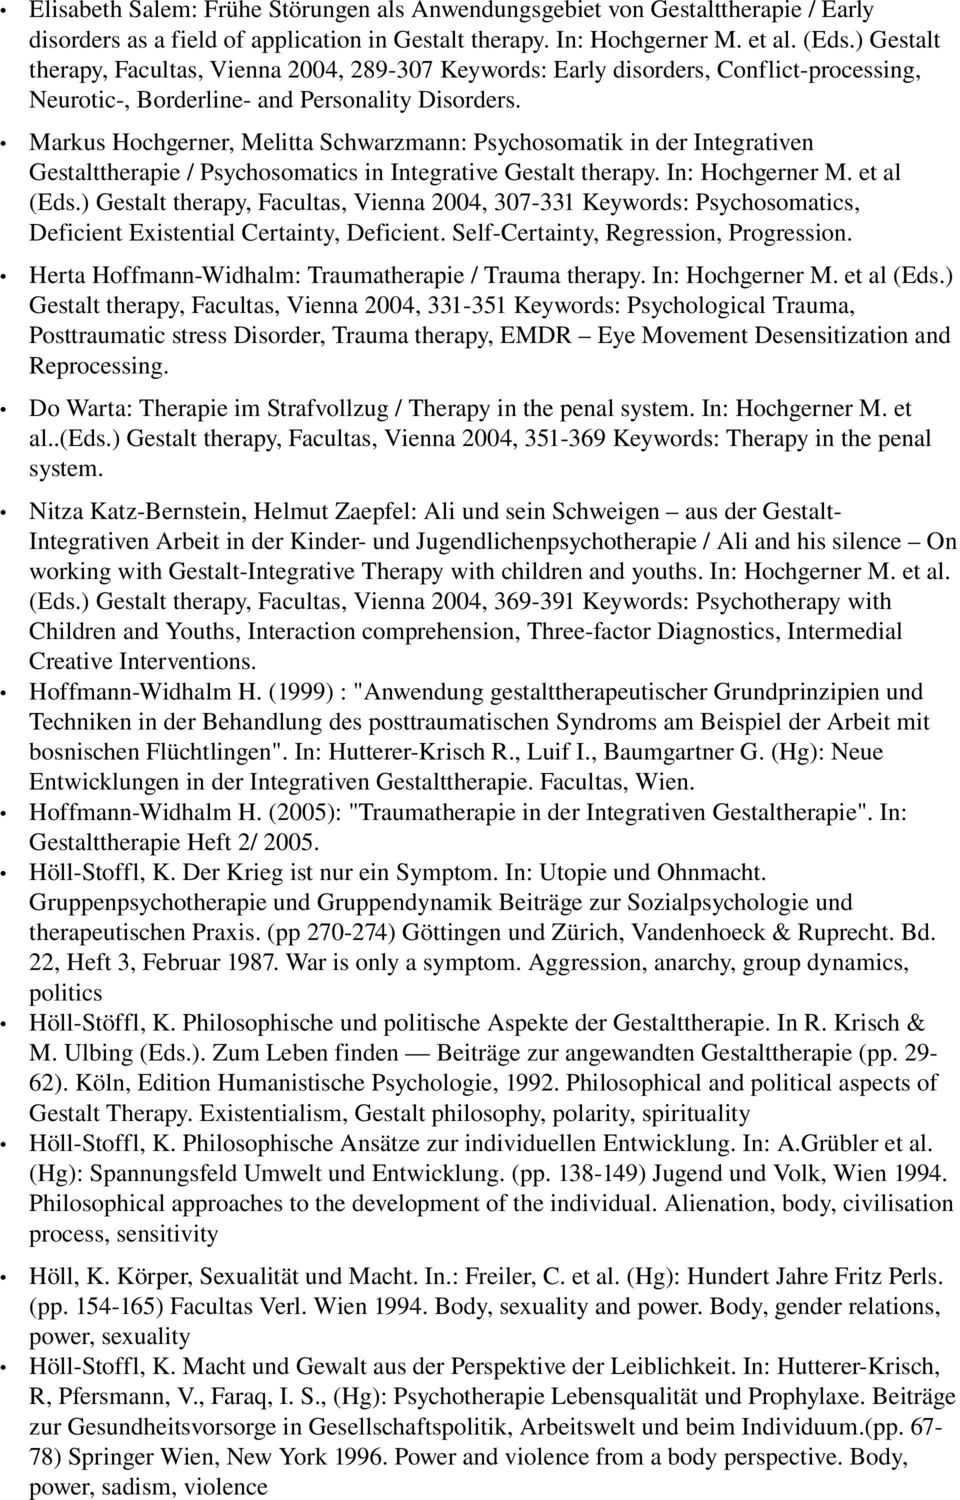 Markus Hochgerner, Melitta Schwarzmann: Psychosomatik in der Integrativen Gestalttherapie / Psychosomatics in Integrative Gestalt therapy. In: Hochgerner M. et al (Eds.